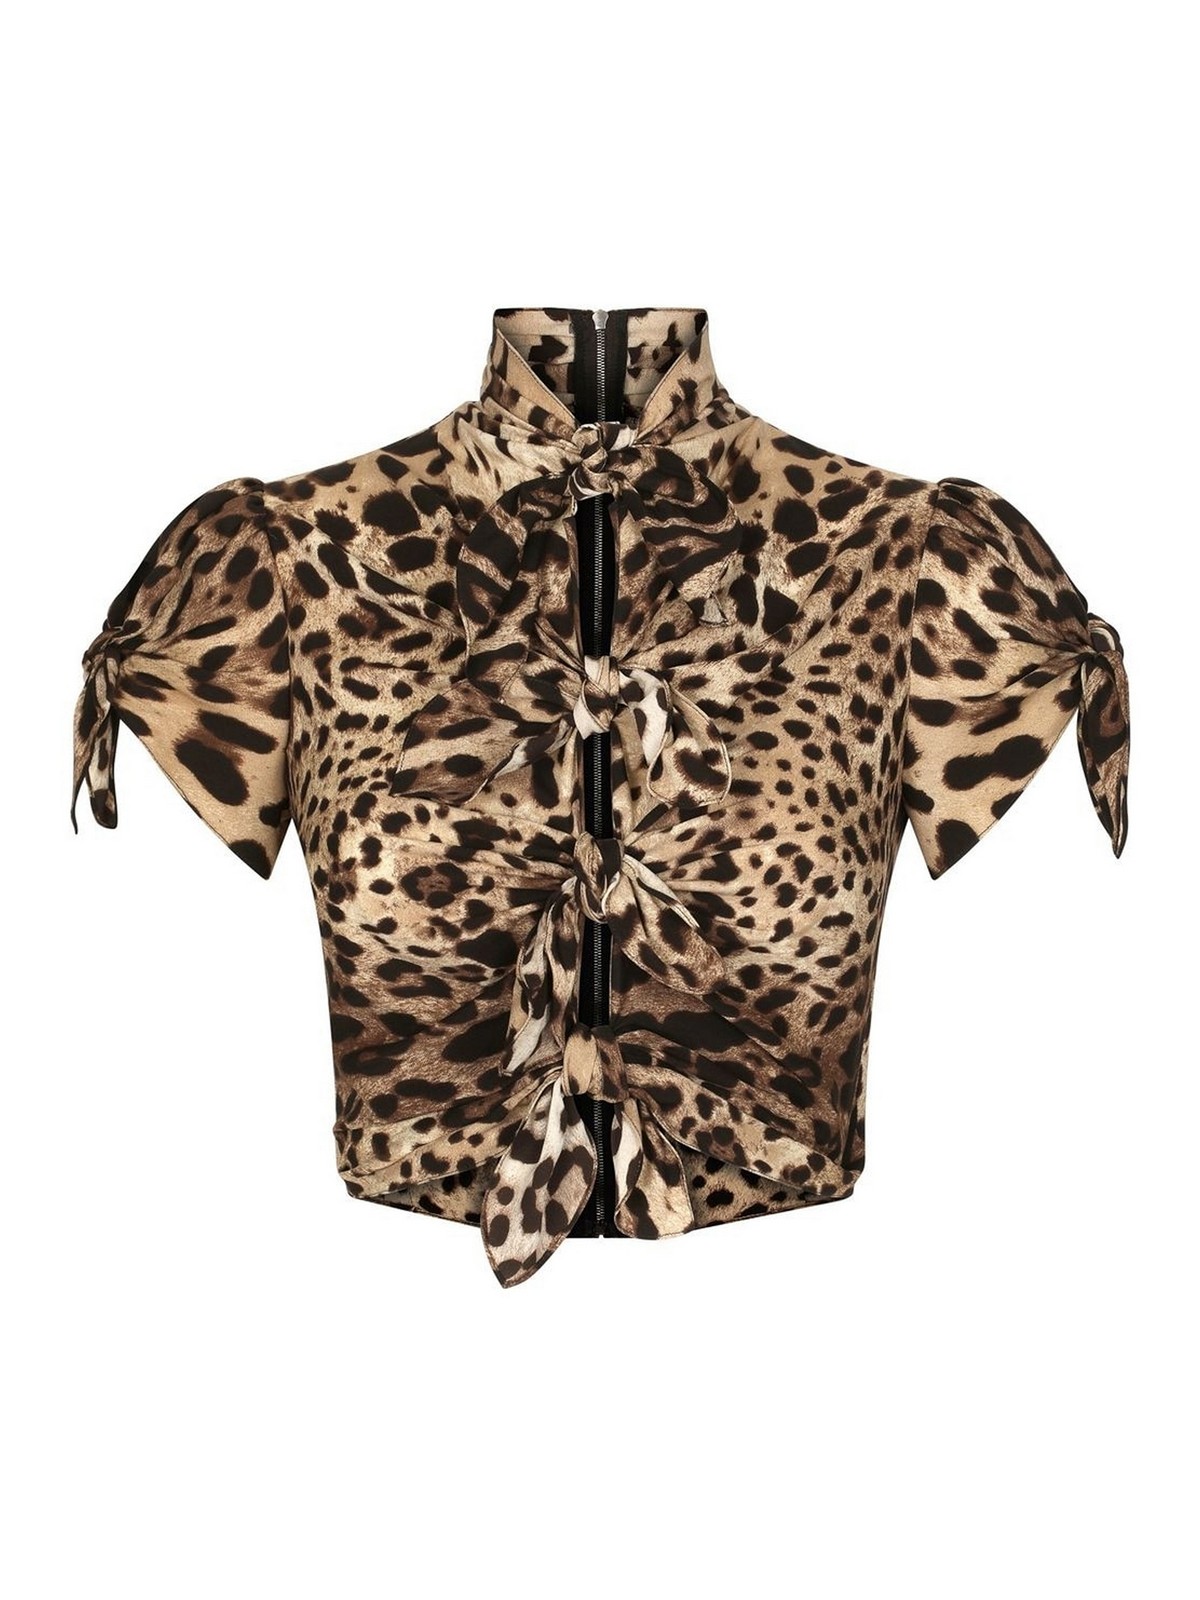 Dolce & Gabbana Leopard-print Cropped Top In Brown